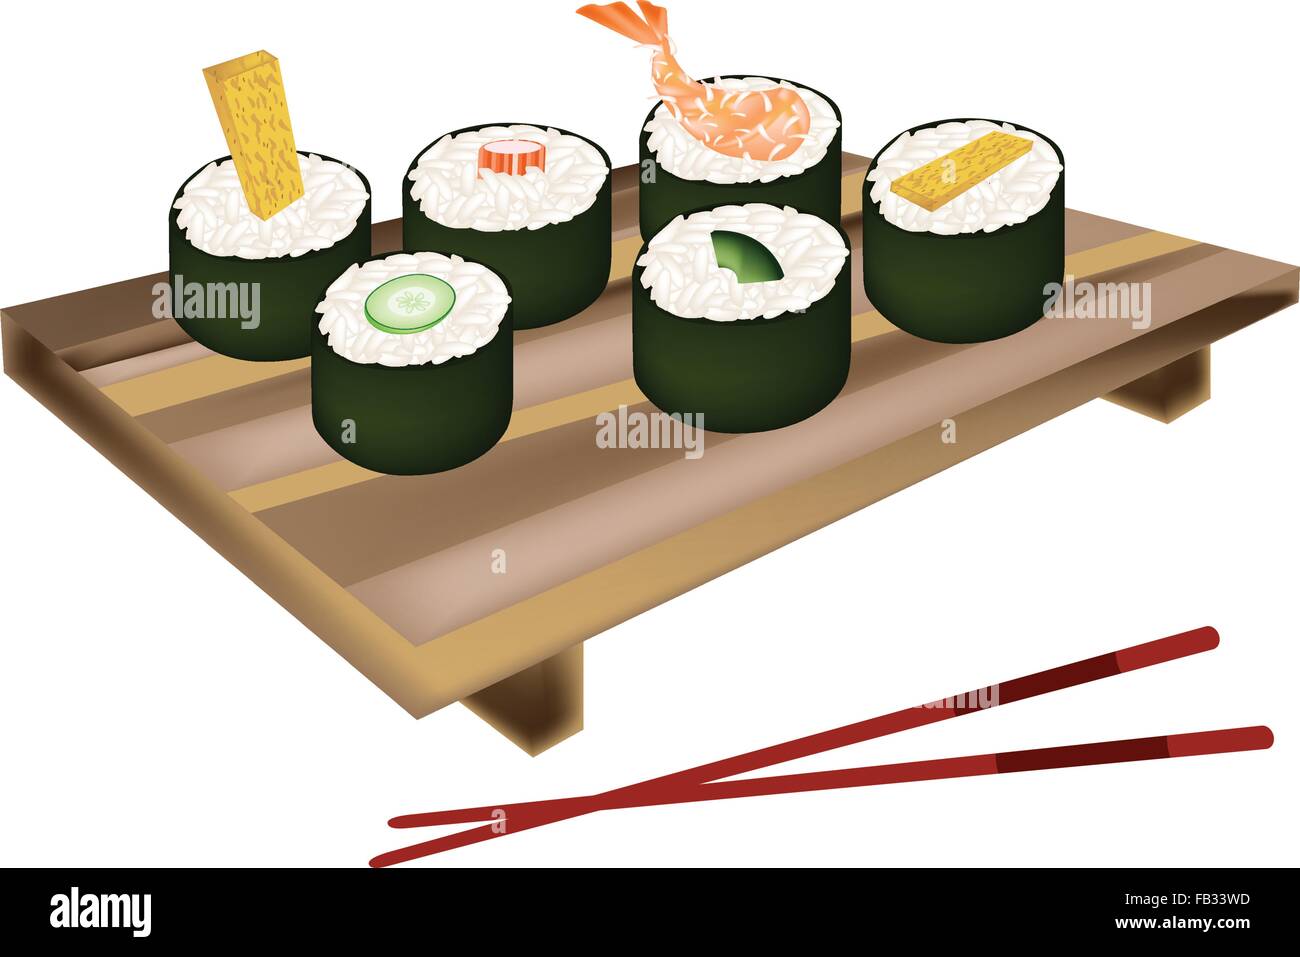 Japanese Cuisine, Illustration of Fresh Ebi Tempura, Tamagoyaki, Surimi, Cucumber and Avocado Sushi Roll on Geta Plate with Chop Stock Vector